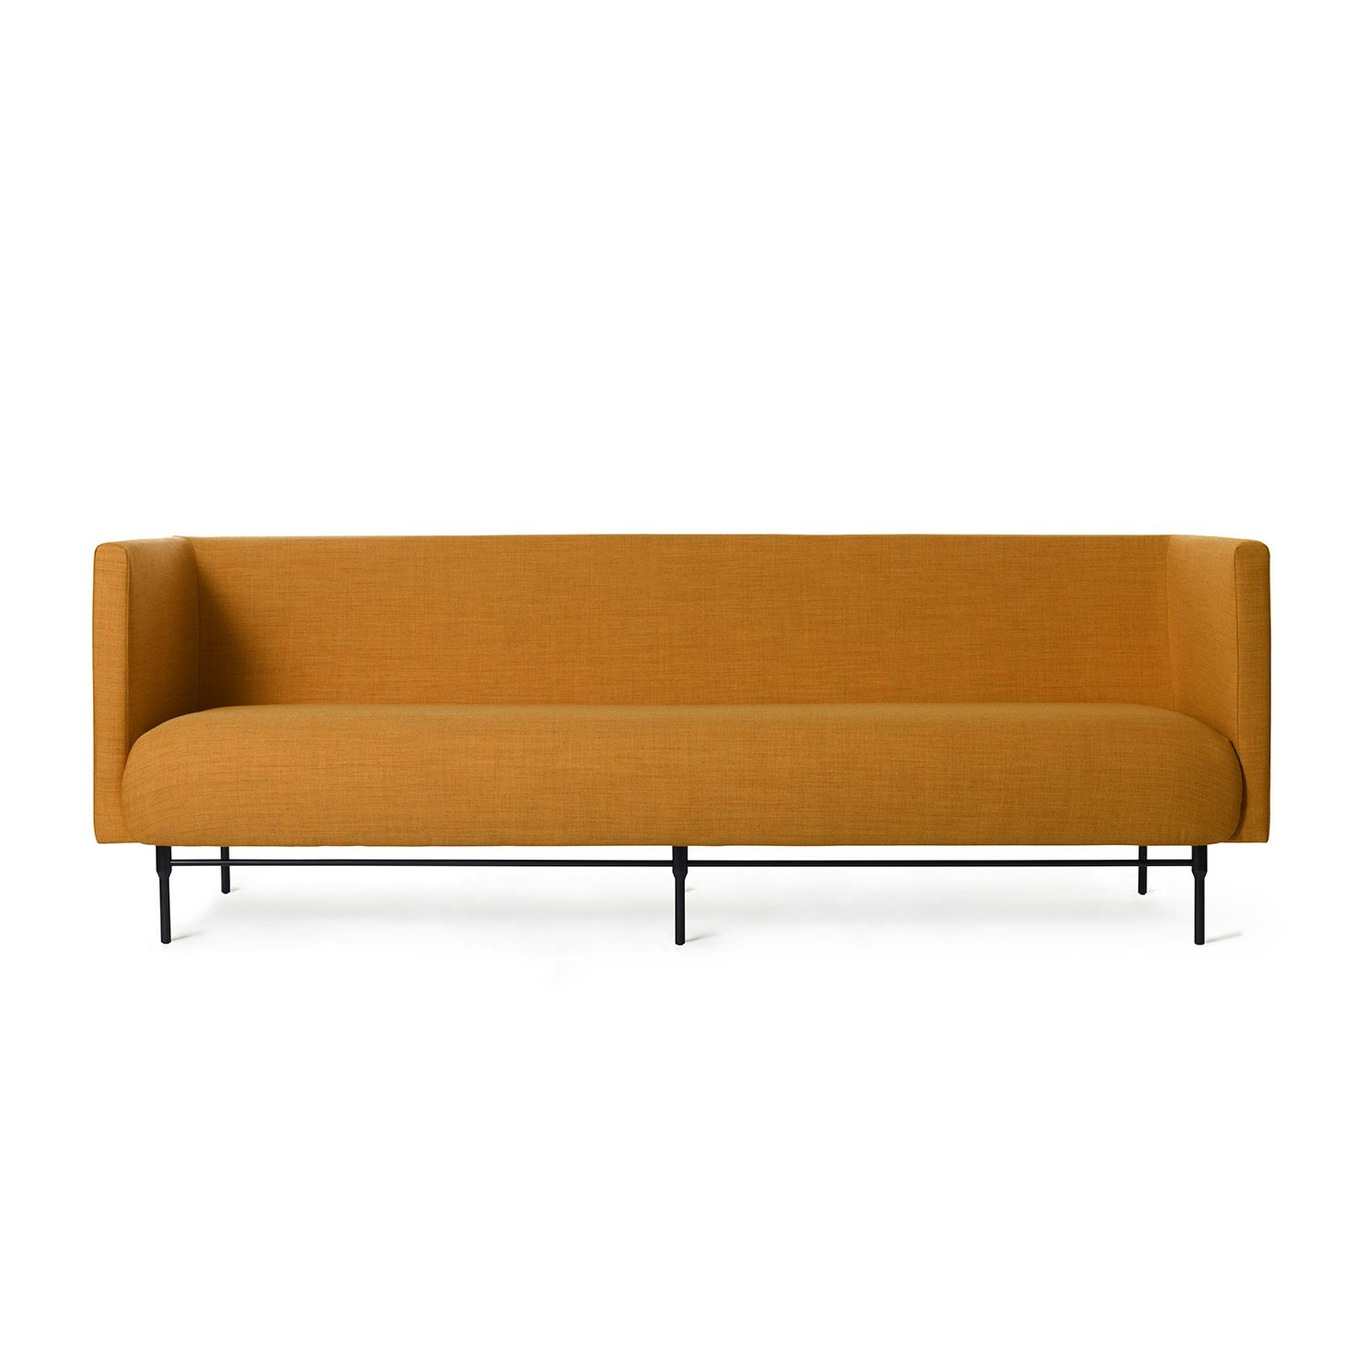 Galore 3-Sitzer-Sofa, Ocker dunkel